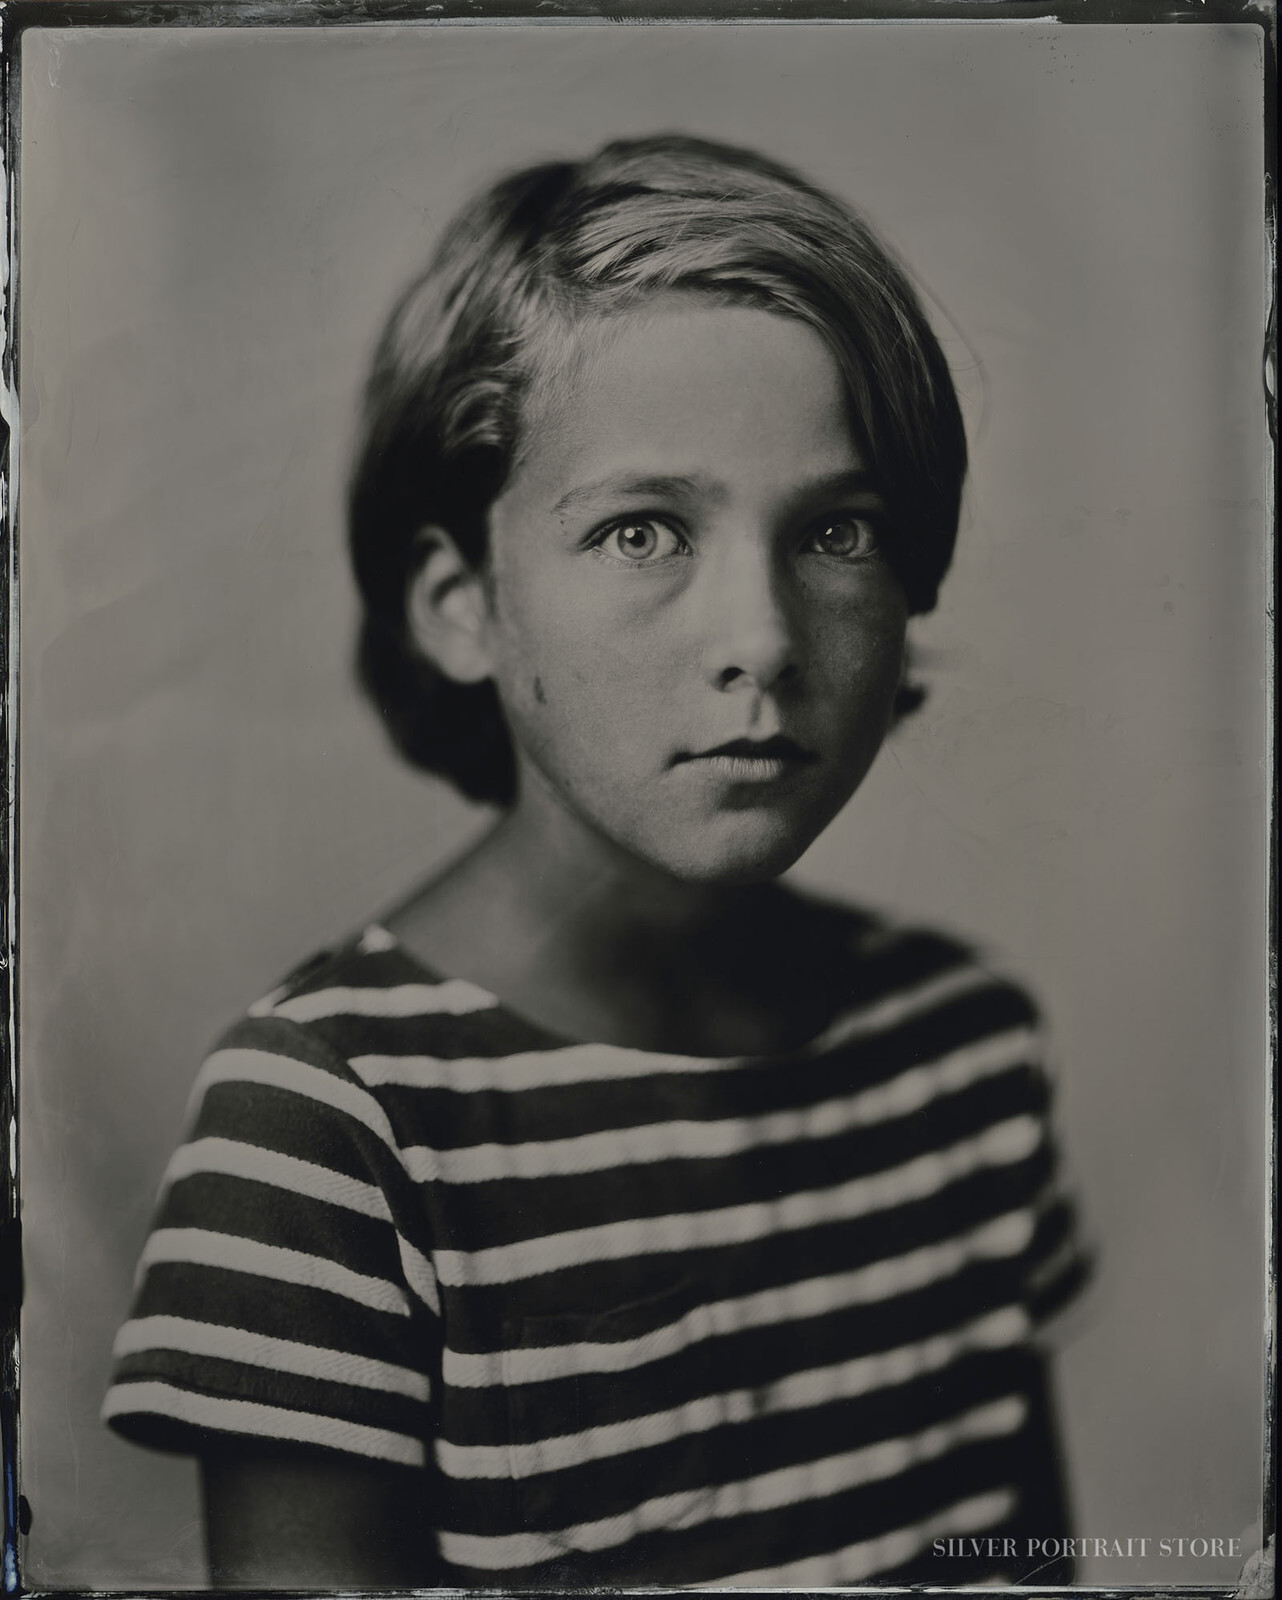 Tijn-Silver Portrait Store-Wet plate collodion-Tintype 20 x 25 cm.